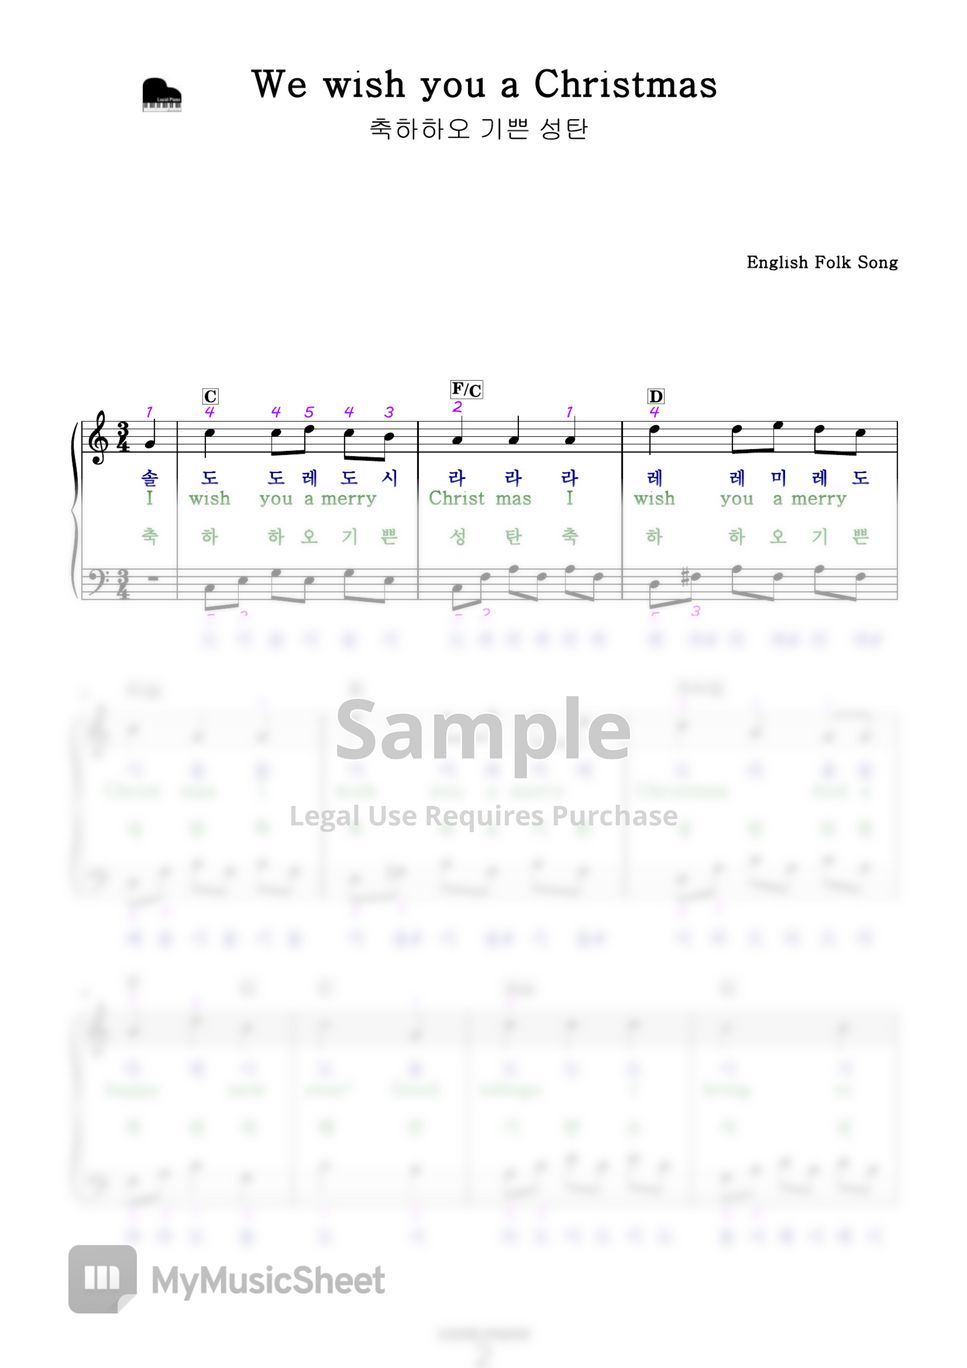 Various Composers - [계이름] 쉬운 크리스마스 캐롤 모음집 (Christmas Carol Collection) (15곡, 22개 악보) by Lucid Piano